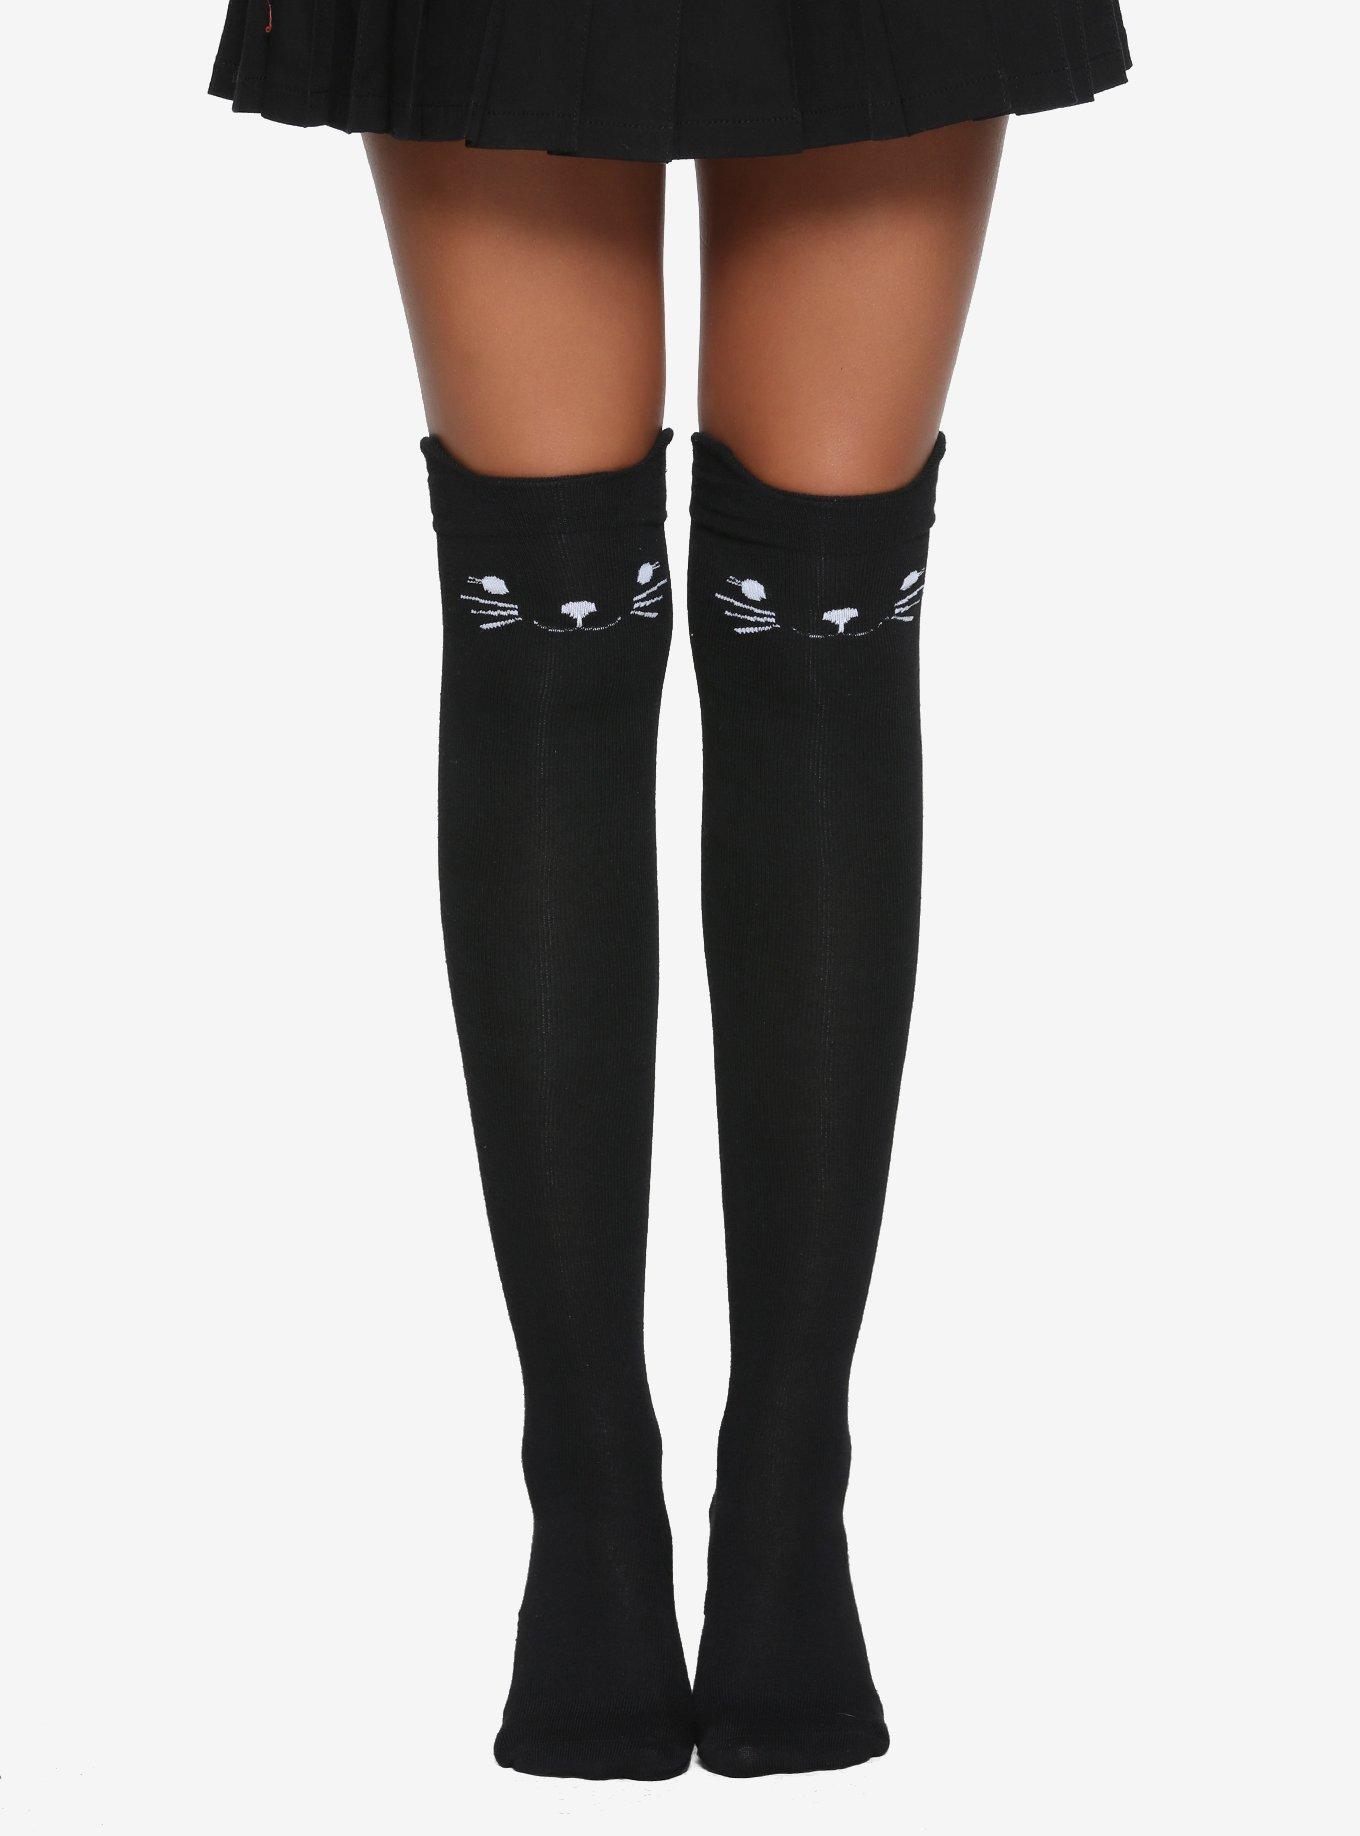 Black Cat Over-The-Knee Socks, , hi-res